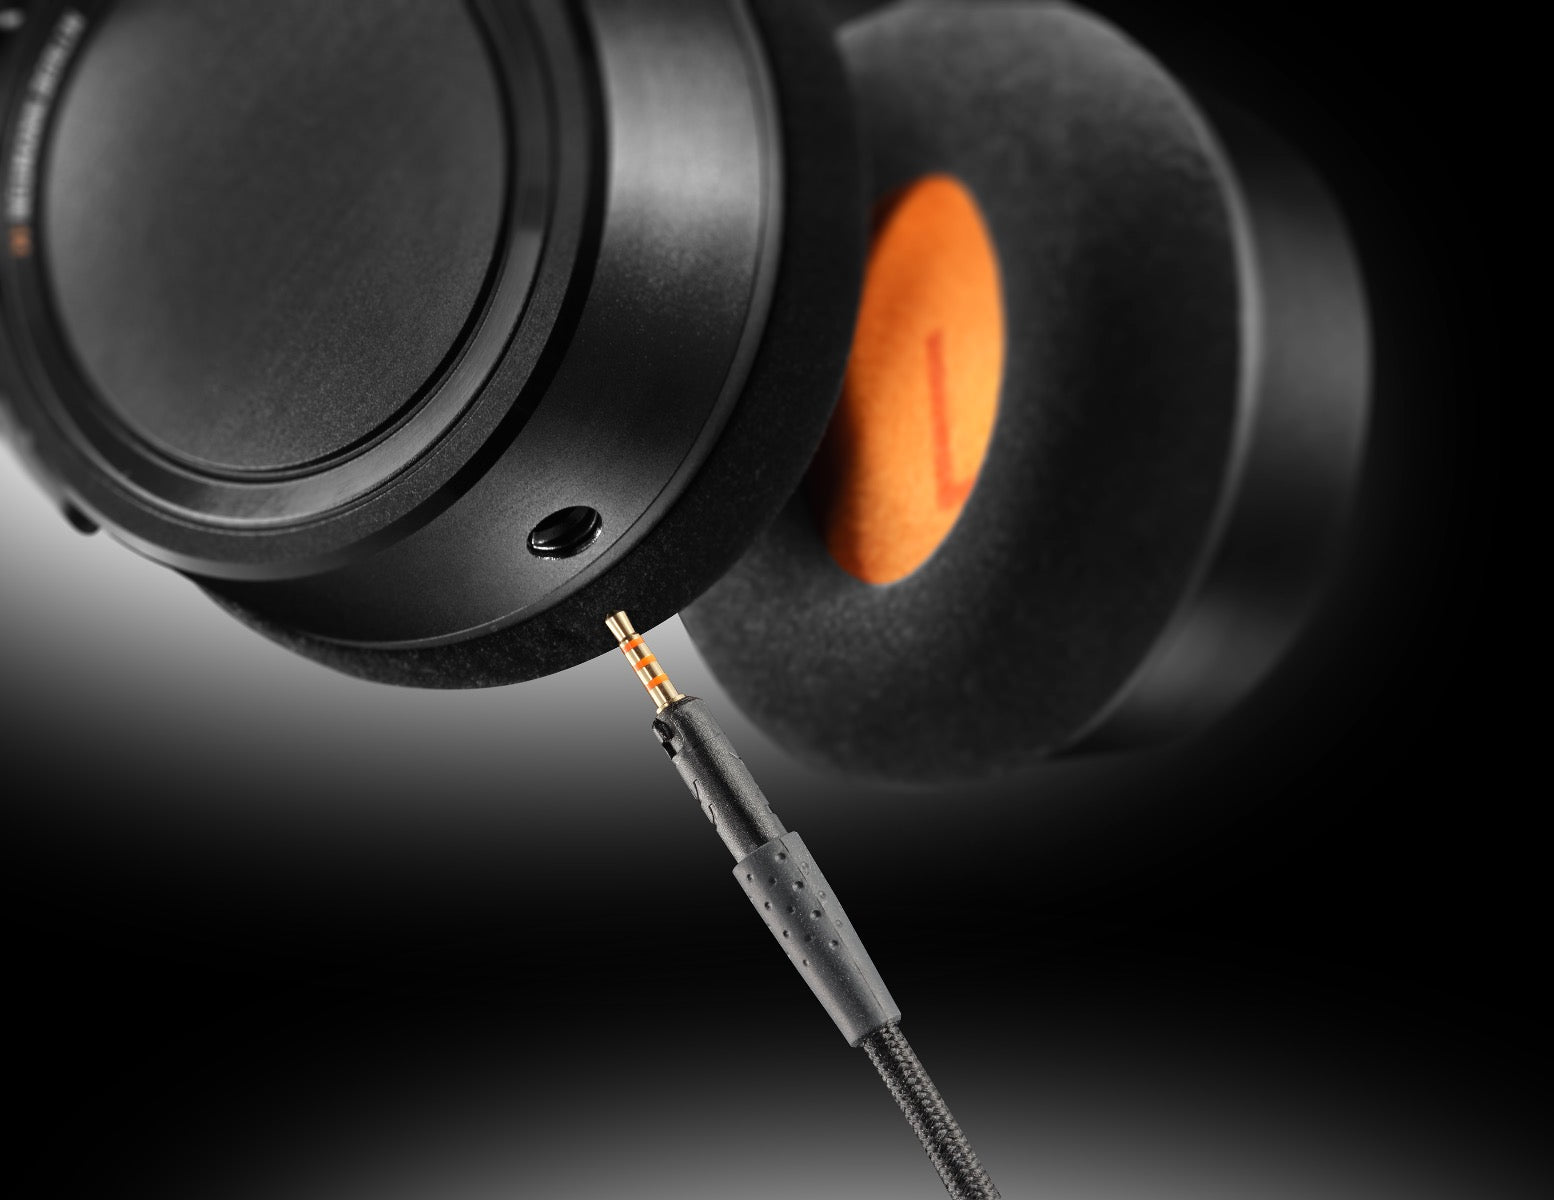 Neumann NDH 20 Studio Closed back headphones - Black Edition, View 5